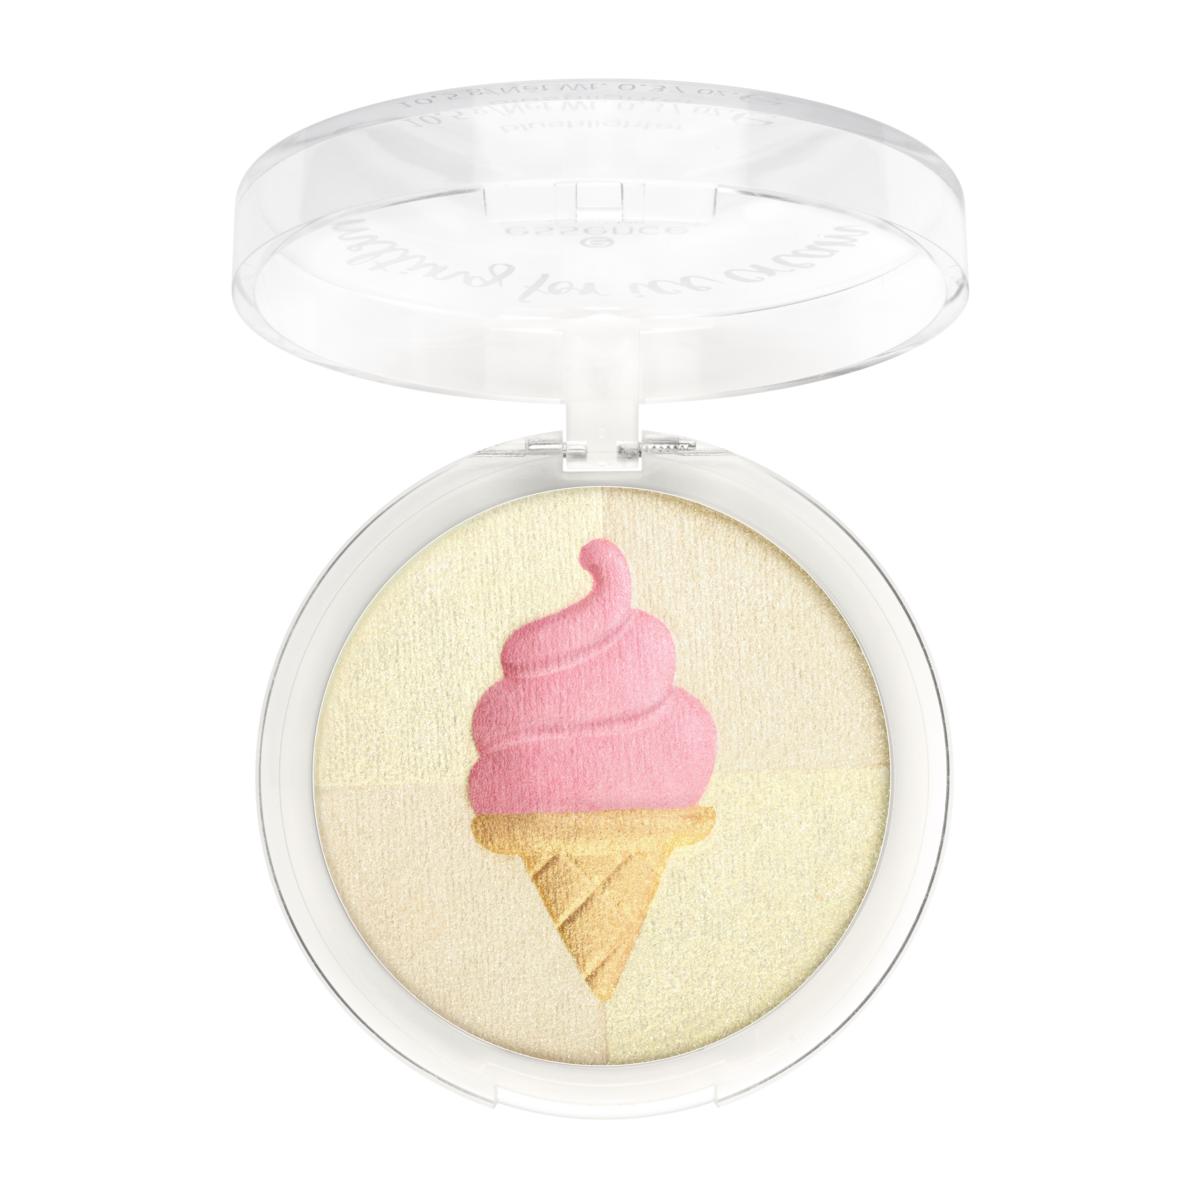 هایلایتر بستنی - ice cream highlighter